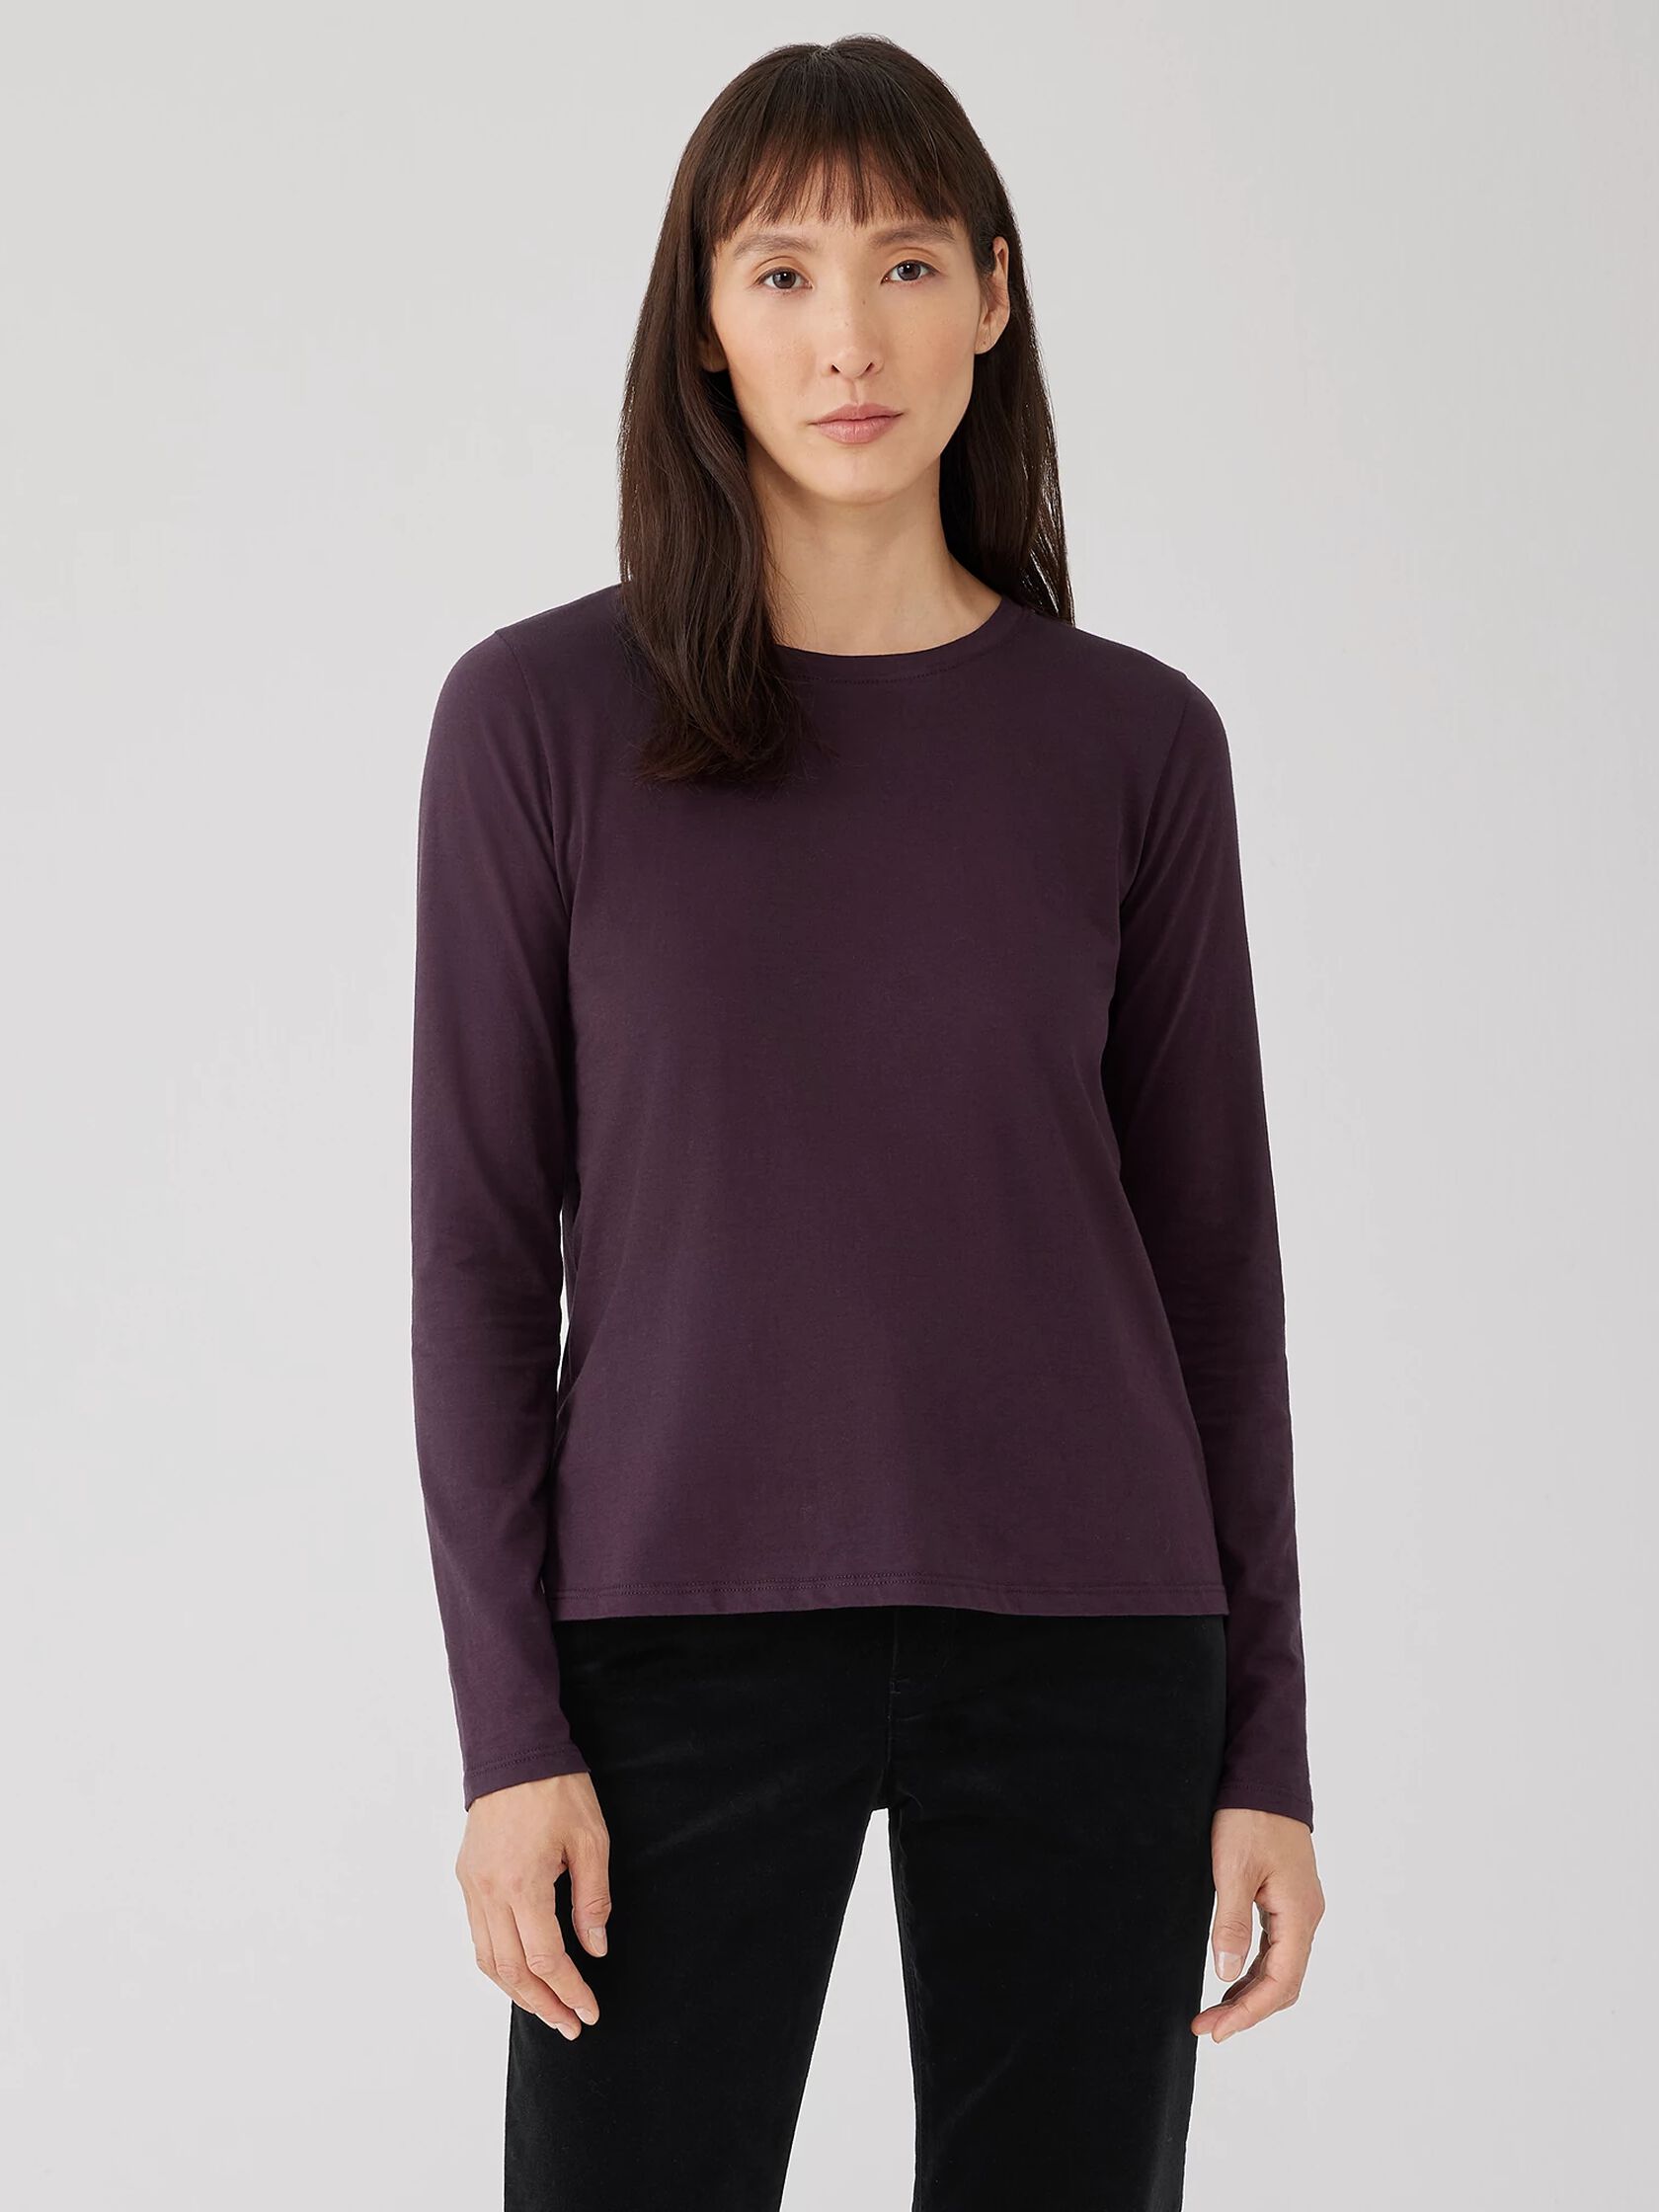 Lululemon Love Crewneck T-Shirt Sweatshirt - Purple Pima Cotton Fabric